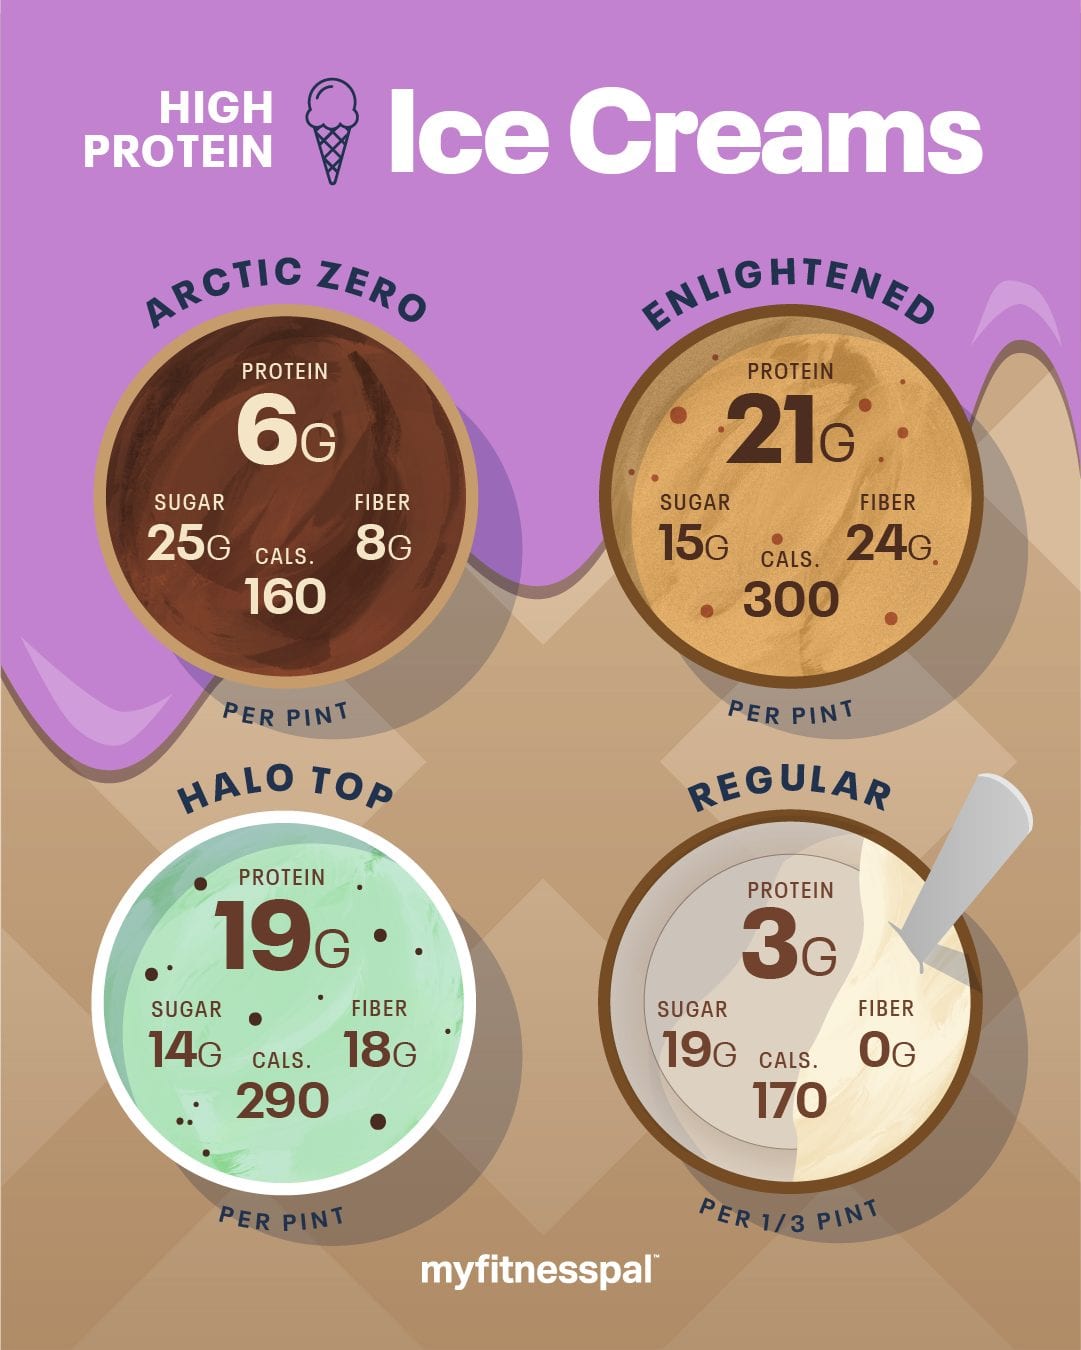 Are High-Protein Ice Creams Actually Healthy?